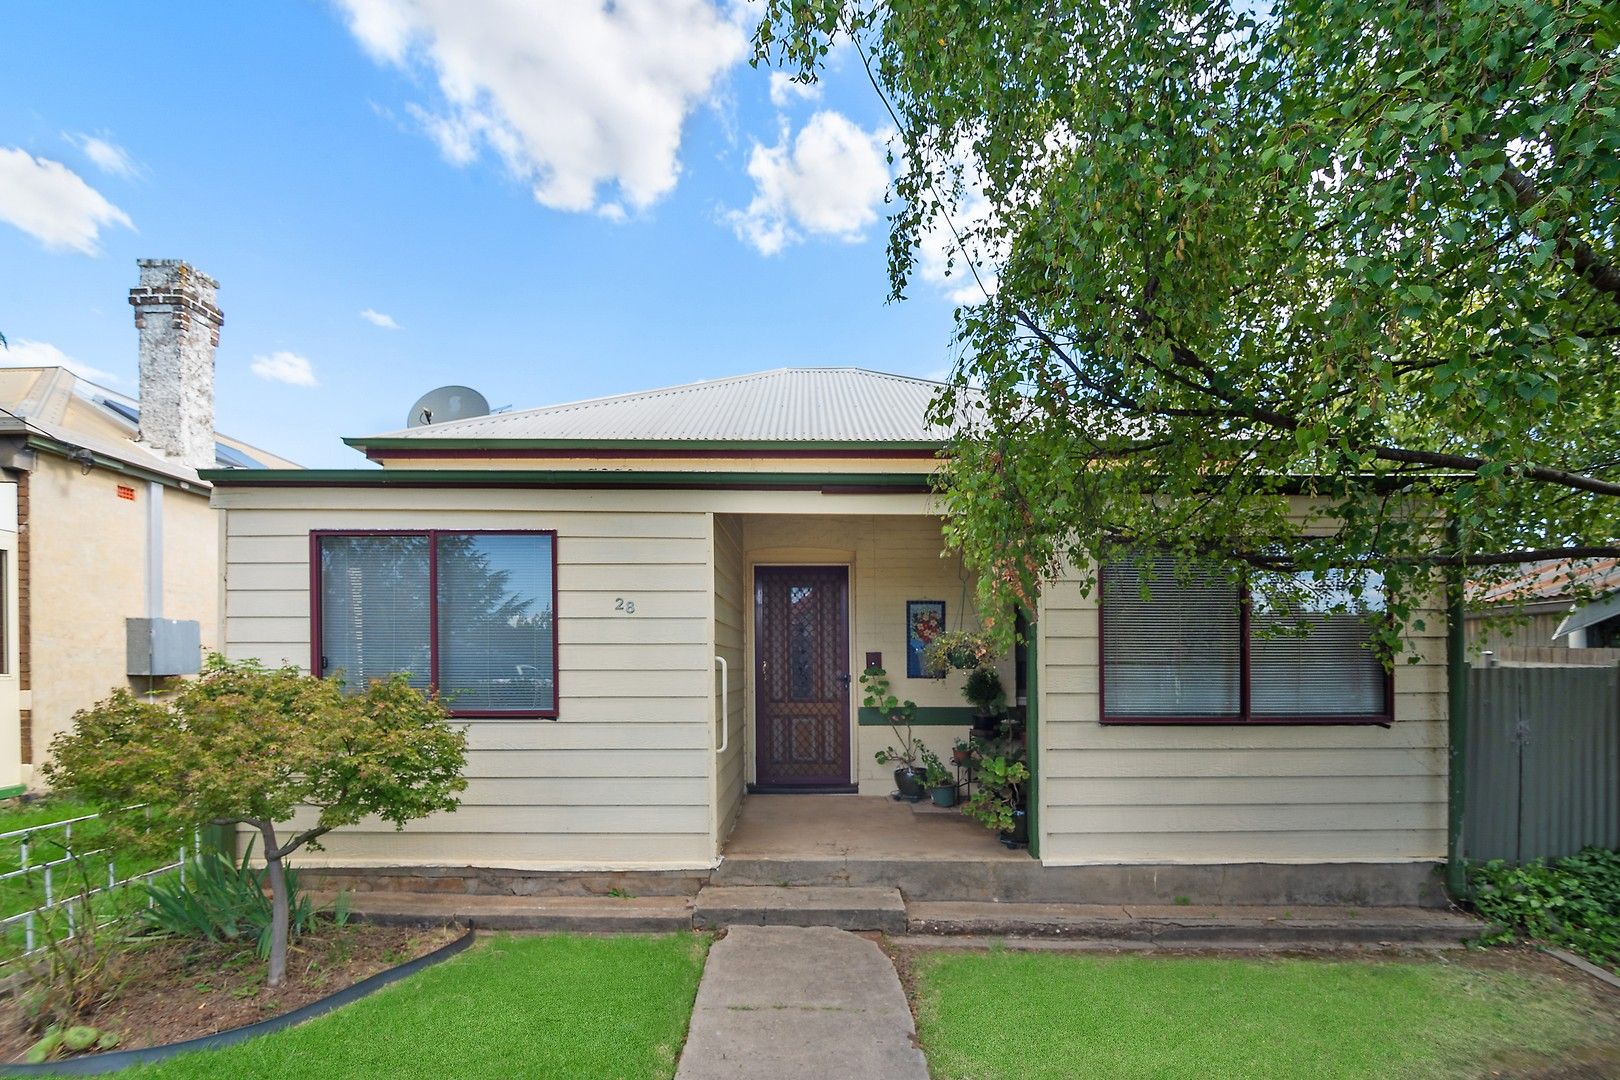 2 bedrooms House in 28 Rosemary Lane ORANGE NSW, 2800